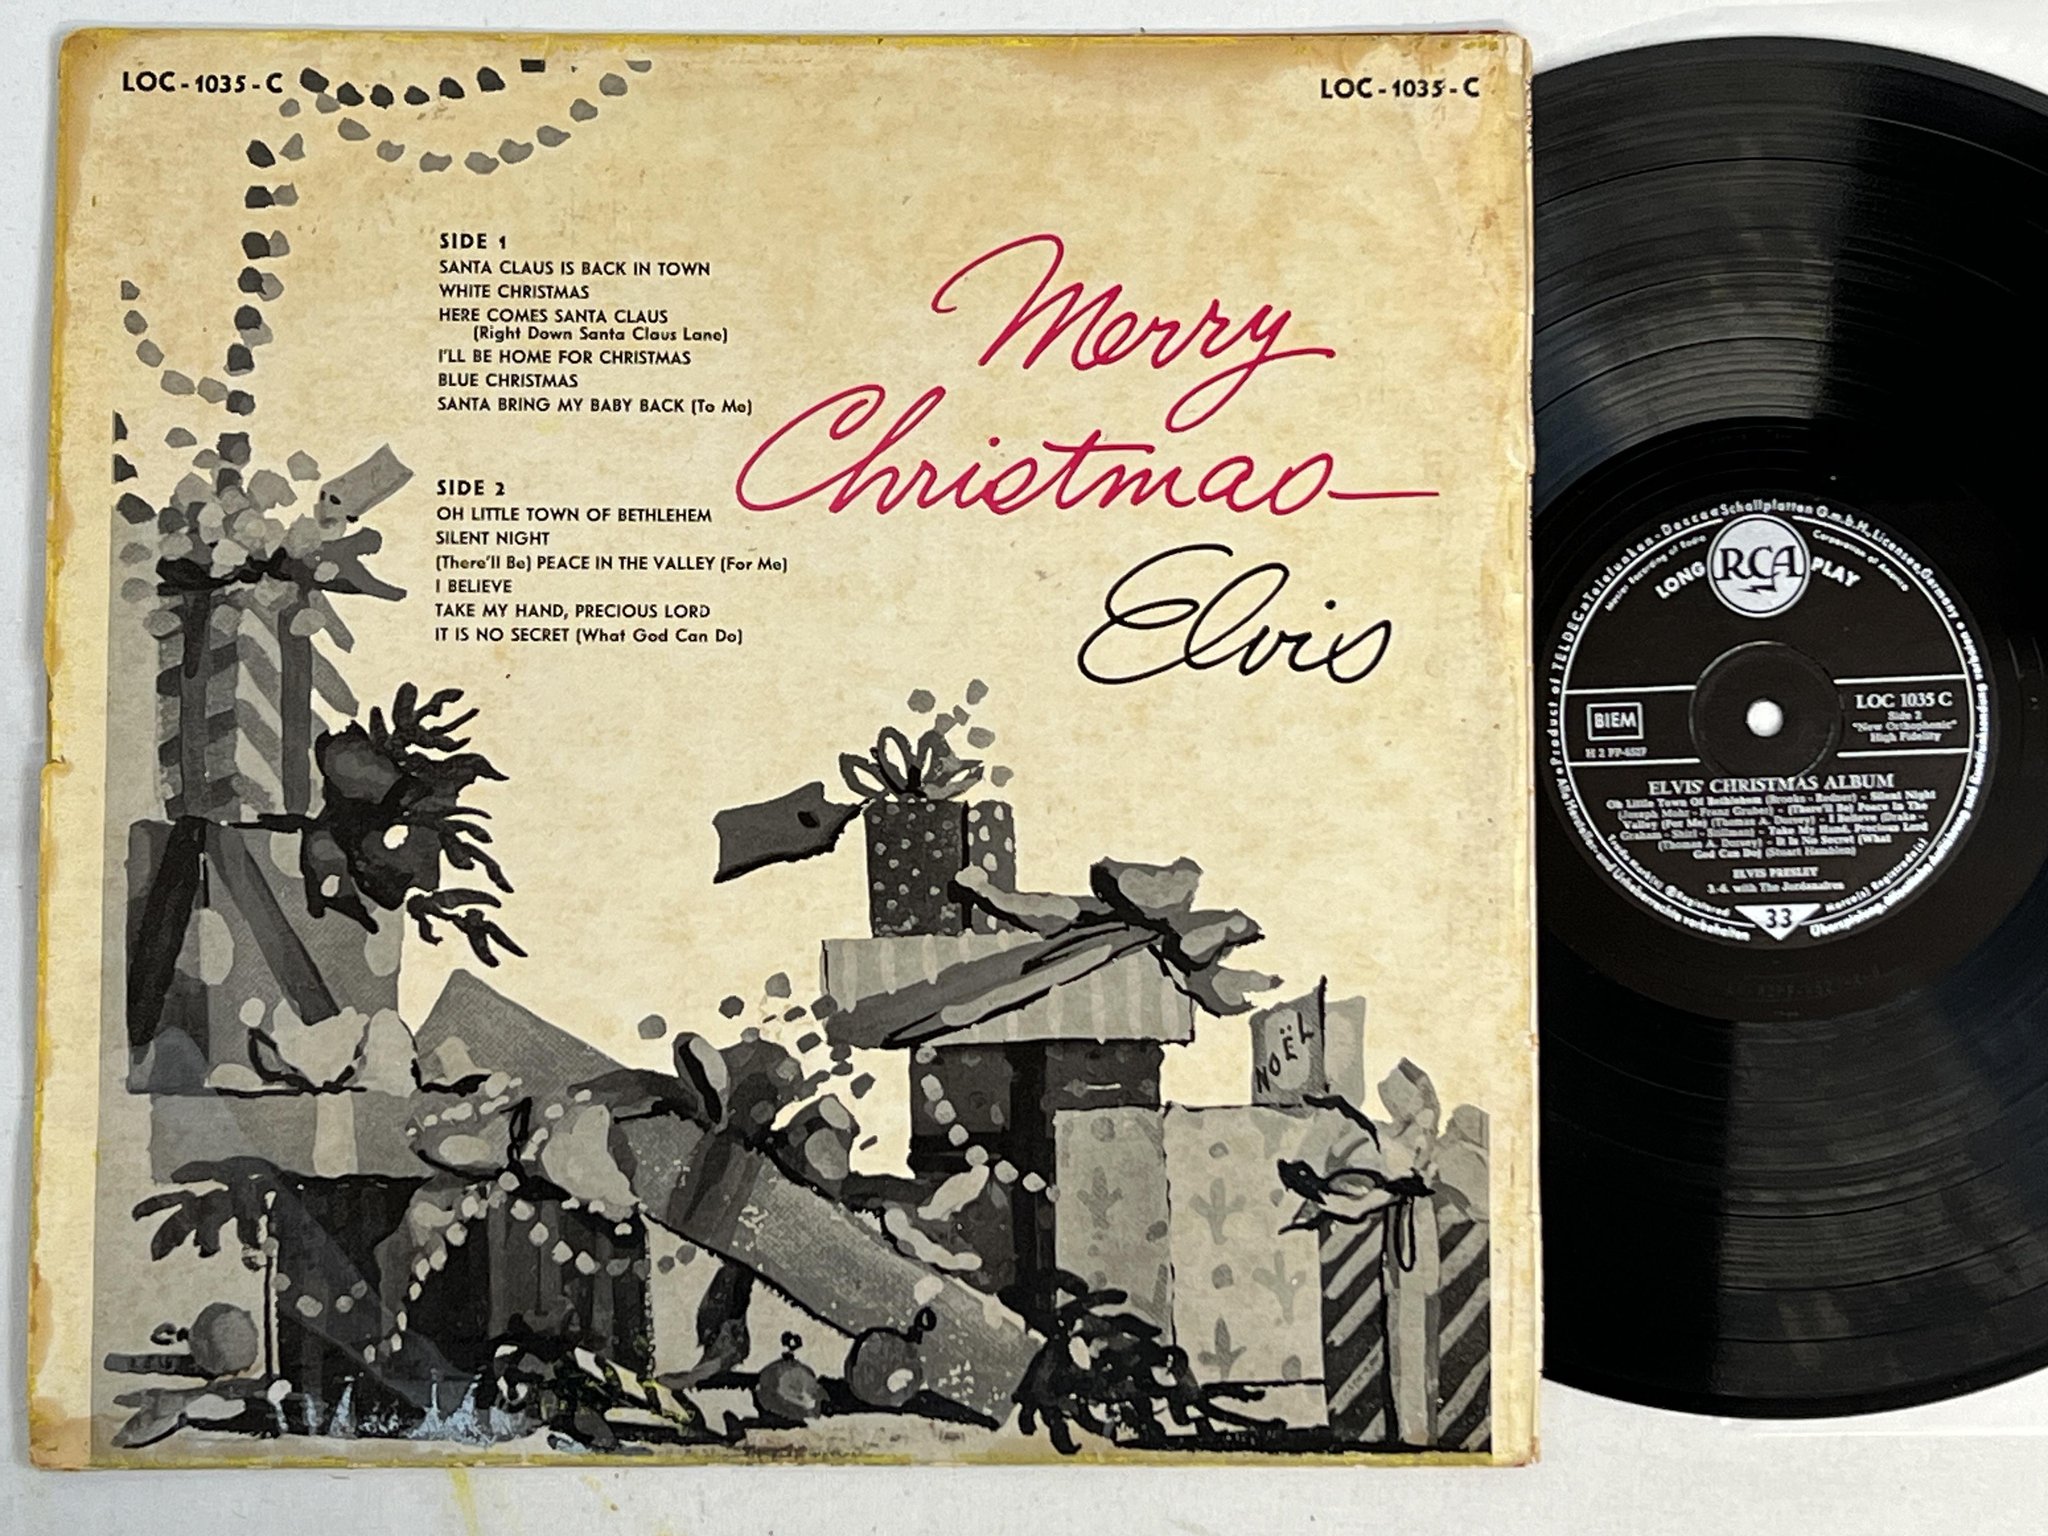 Omslagsbild för skivan ELVIS PRESLEY ELVIS' CHRISTMAS ALBUM LP -60 GER RCA LOC 1035 C ** WOW **